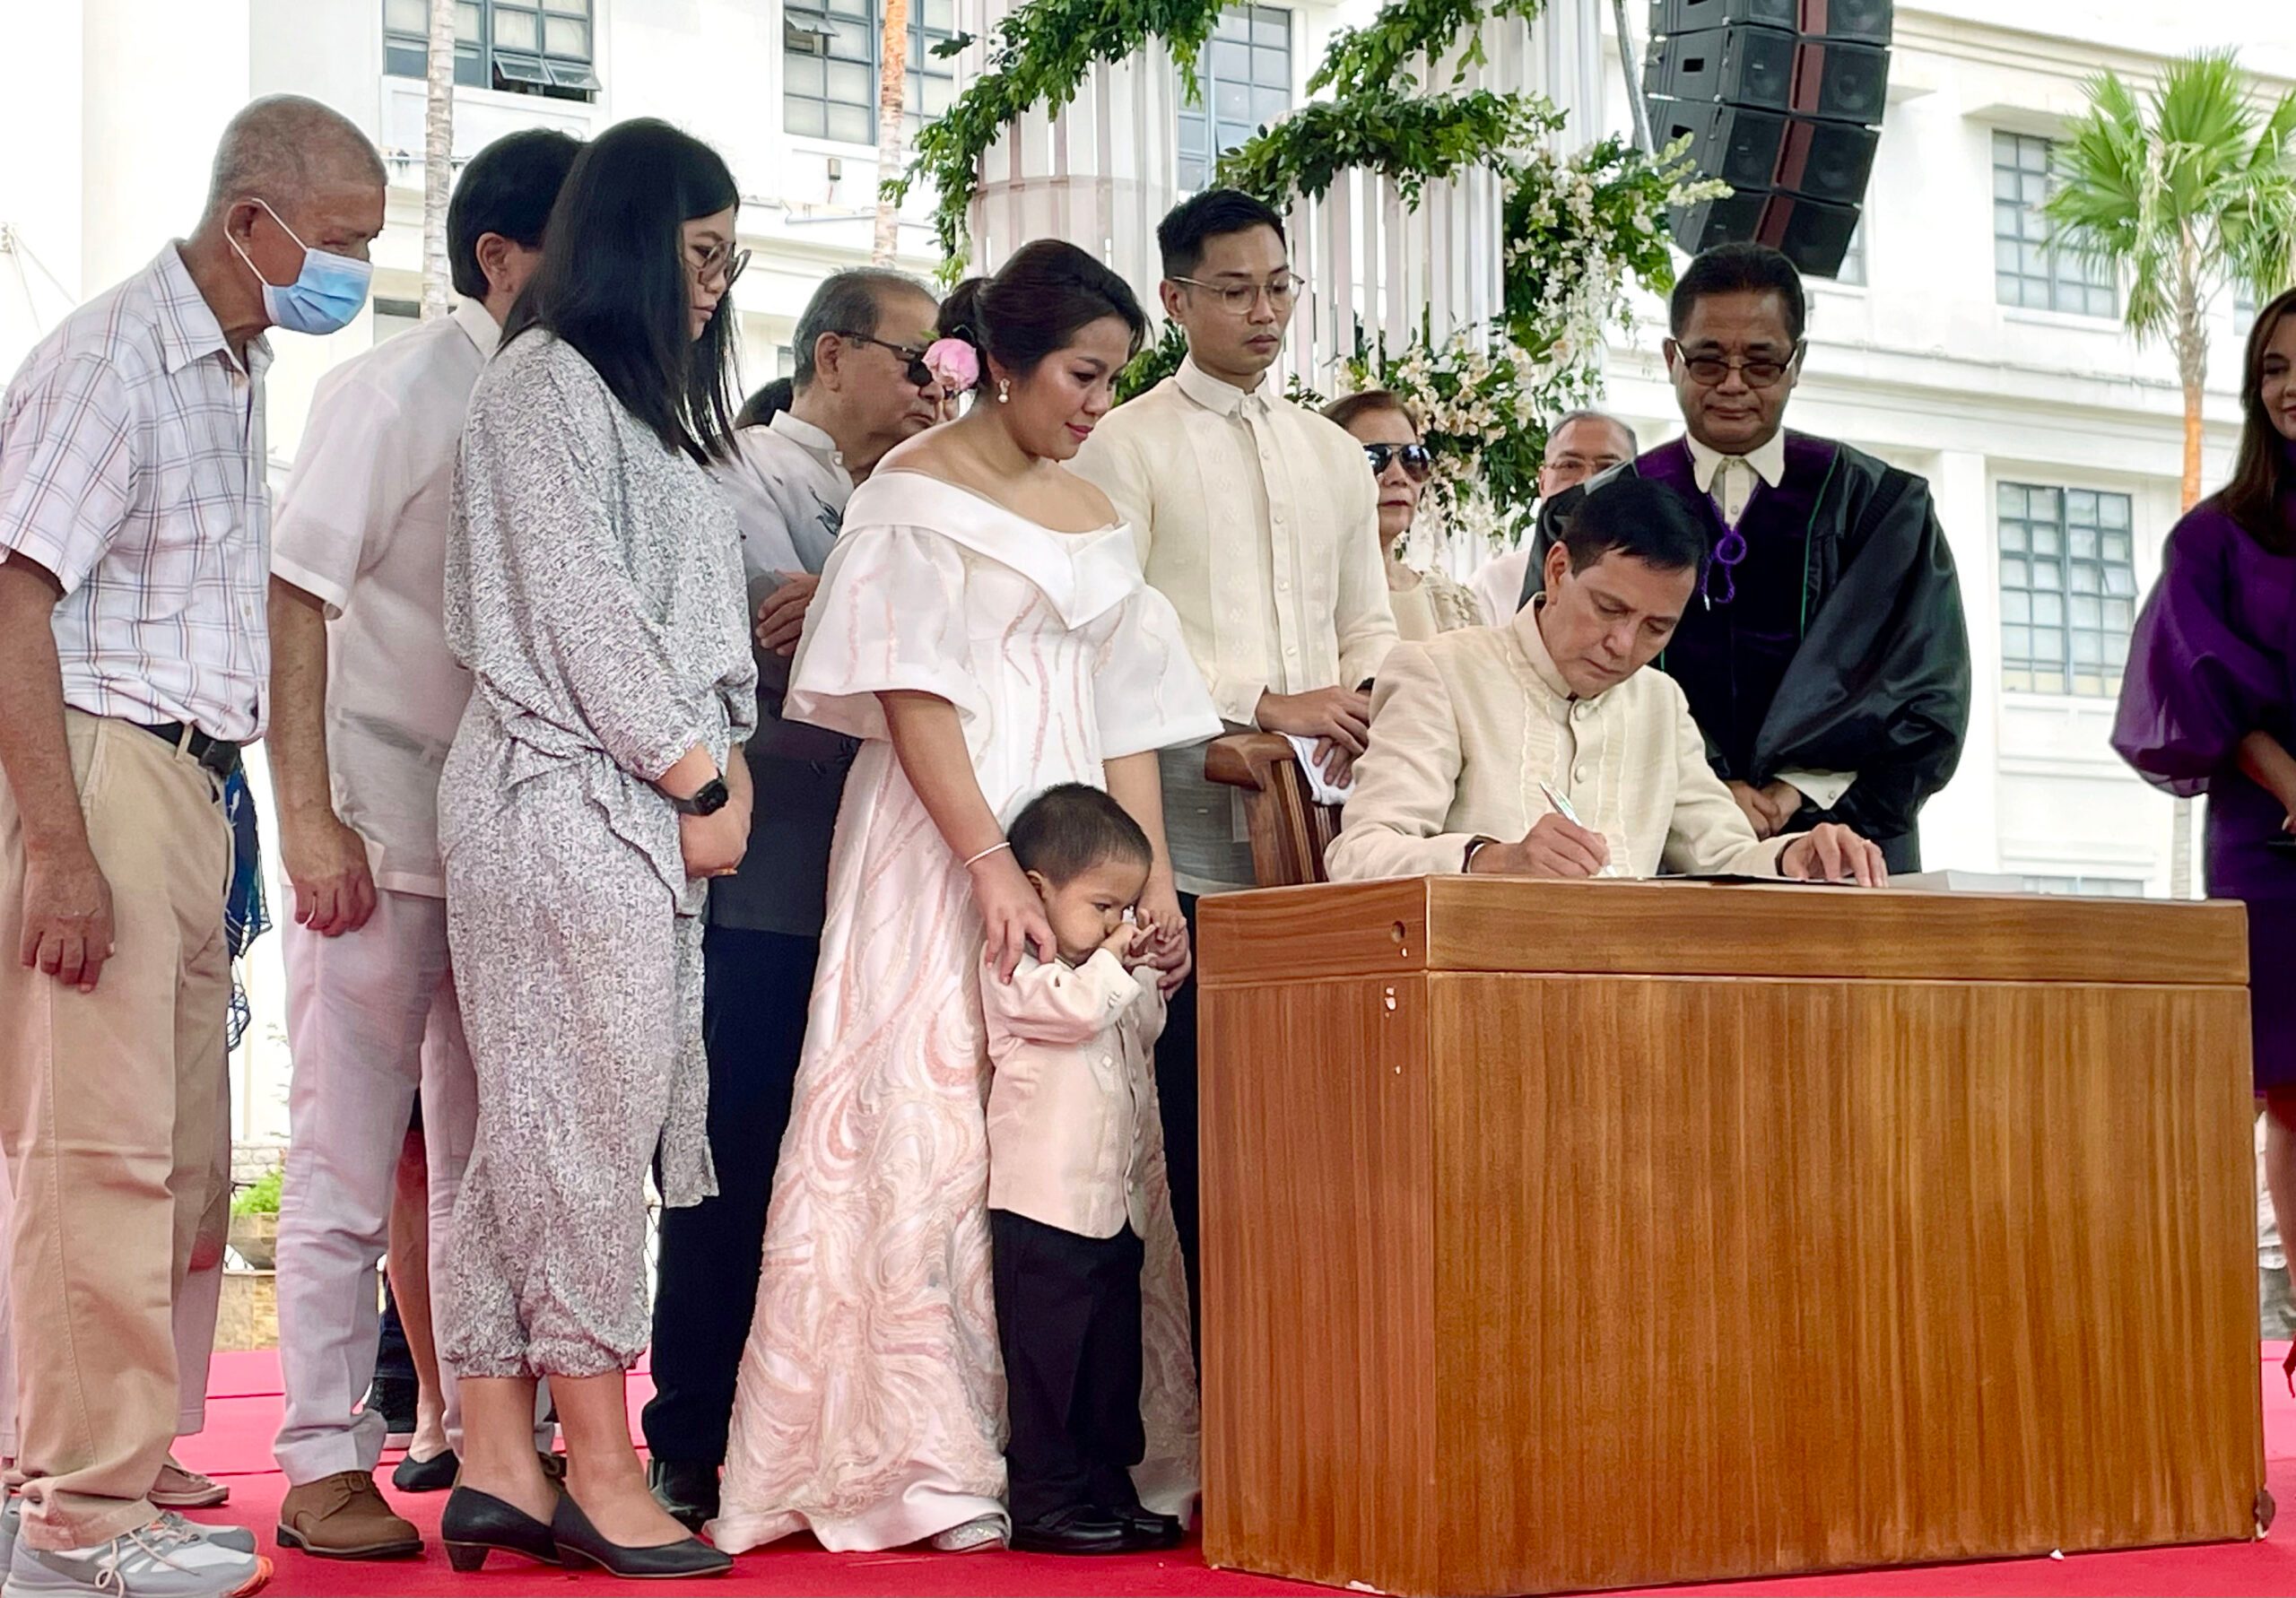 Rama on inauguration day: Make Cebu City second to none